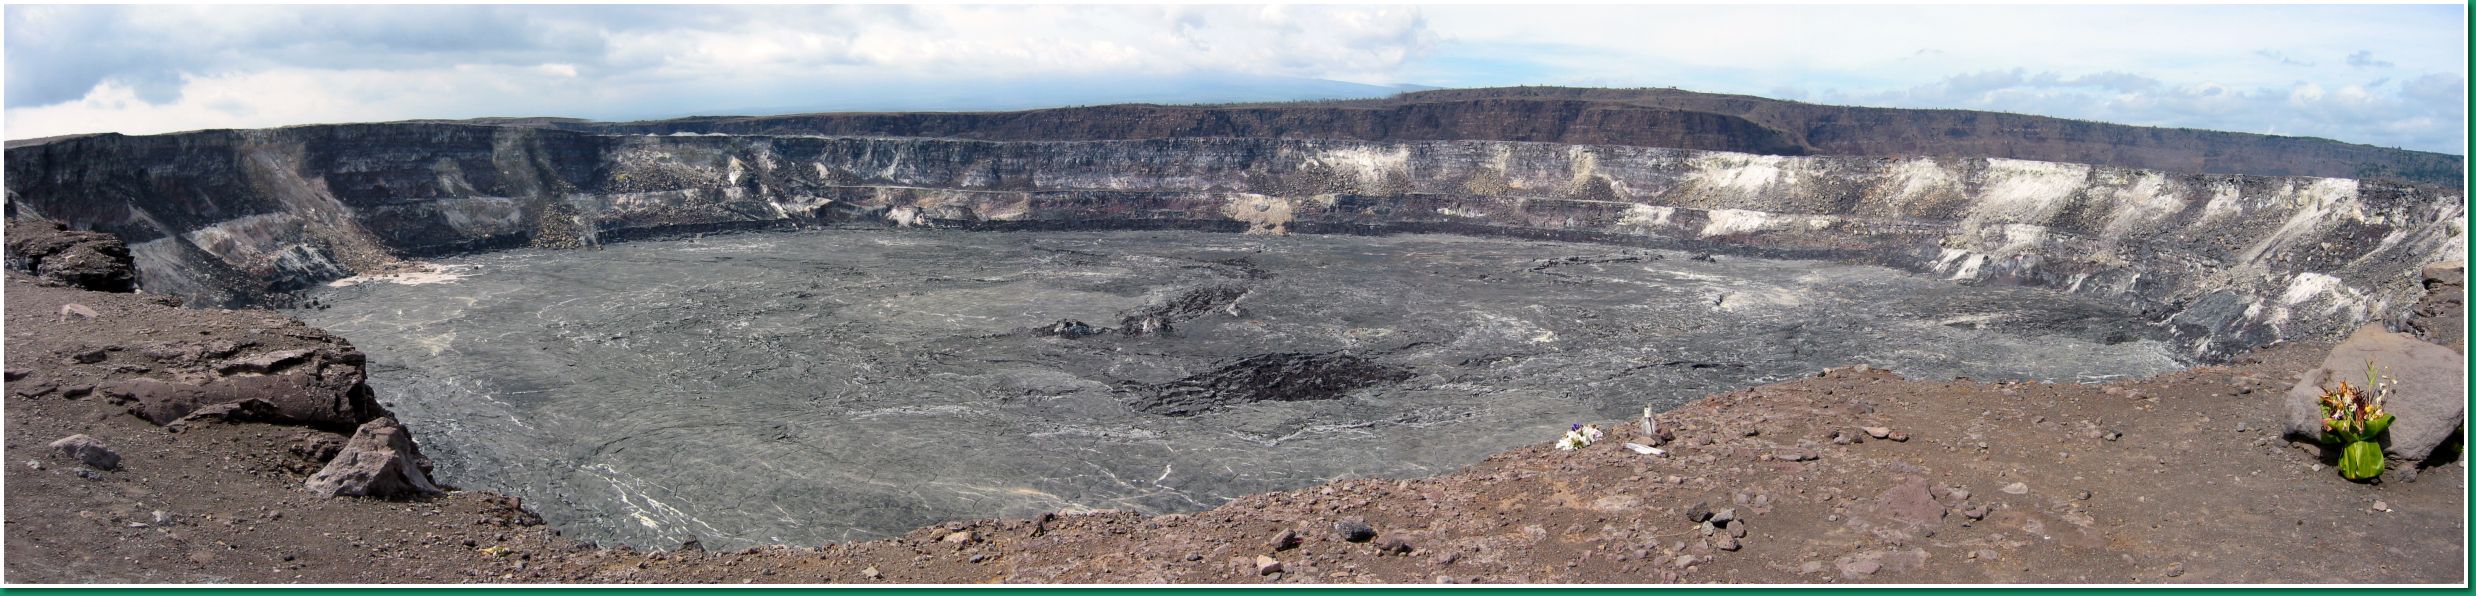 Panorama of Halema'uma'u Crater